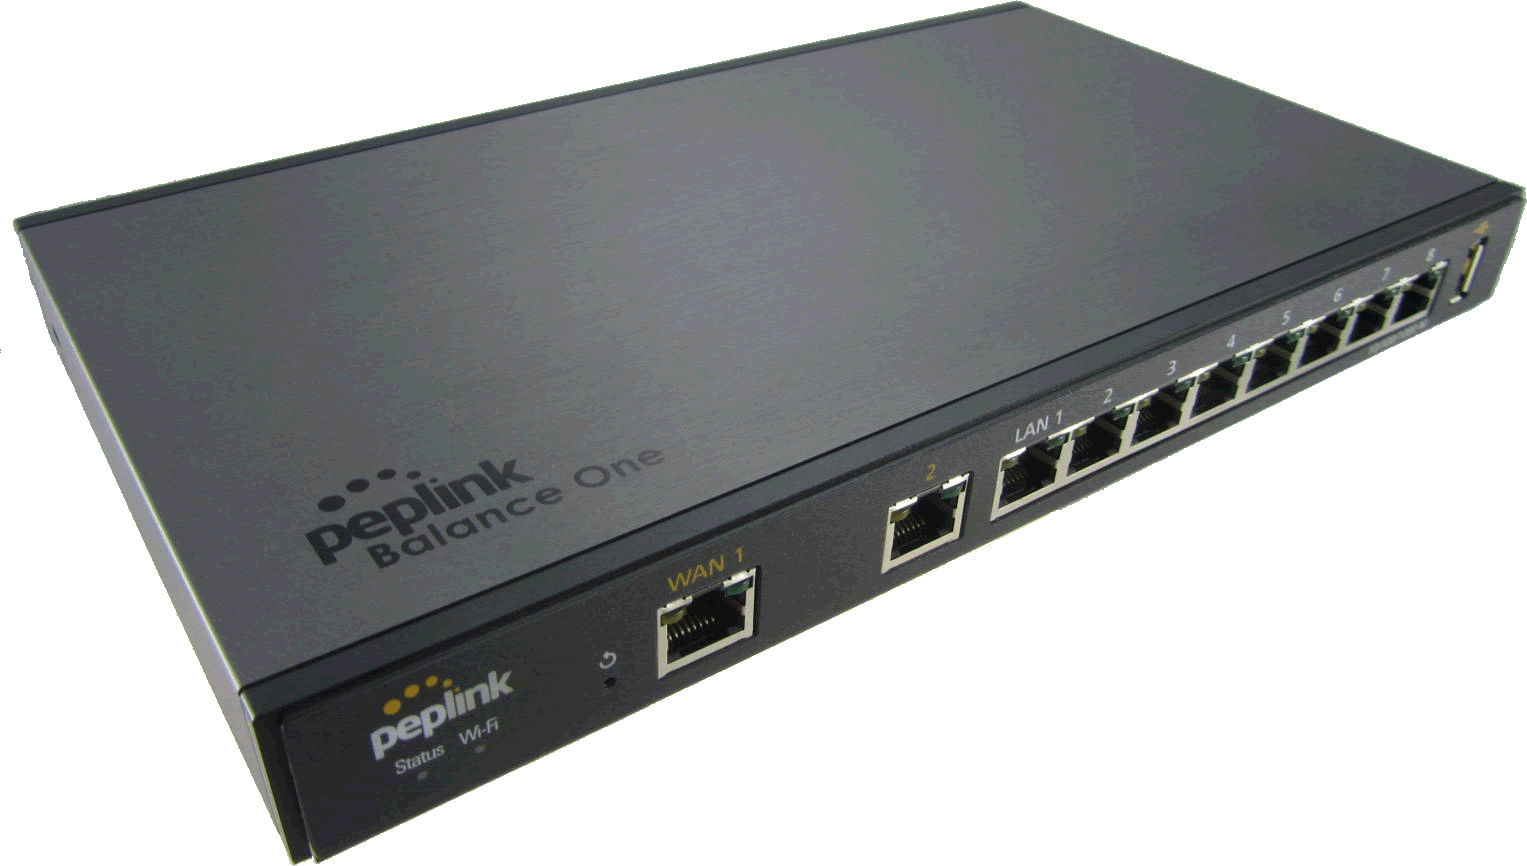   Routeurs 4G LTE Multiwan SdWan Firewall  600Mb Balance OneCore : routeur firewall 2 WAN, 600Mb, 50 users